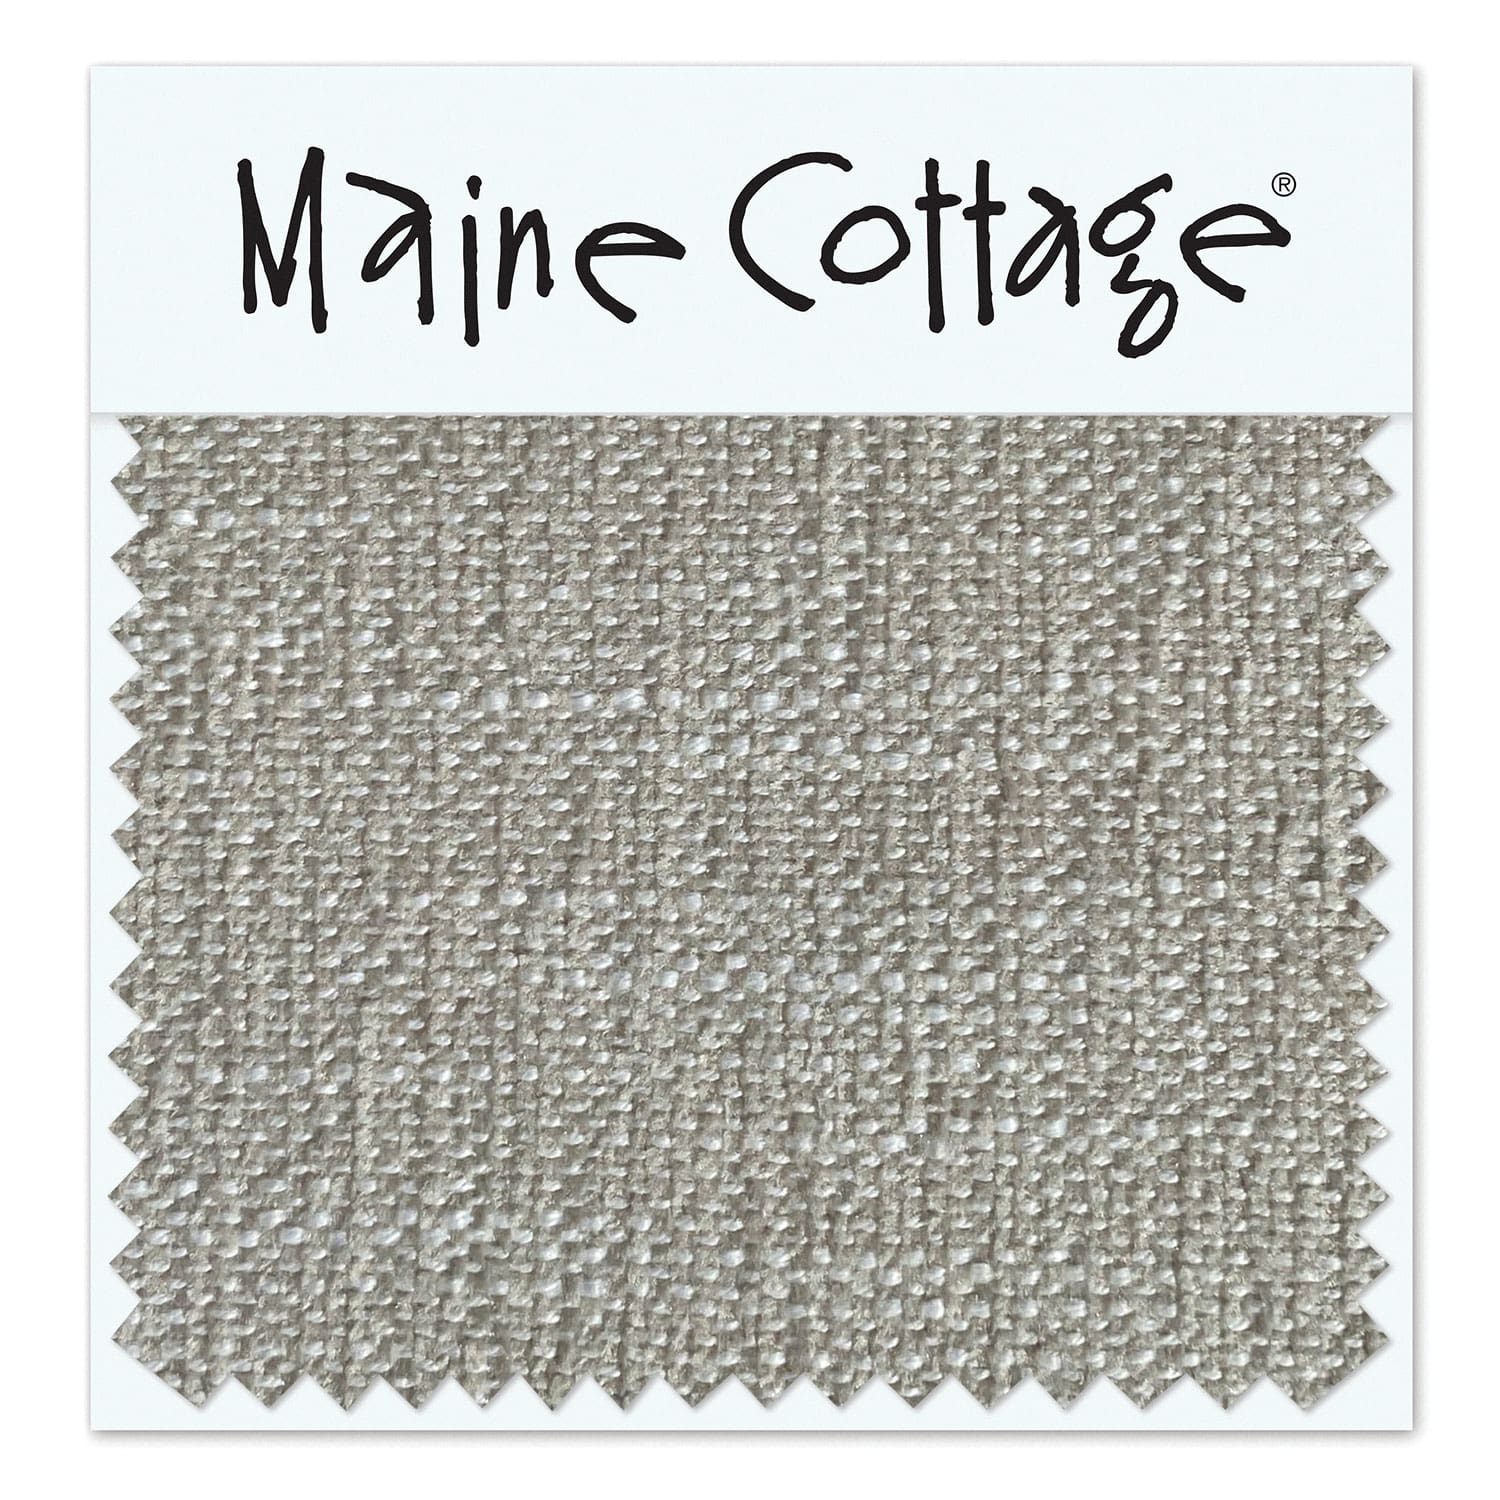 Maine Cottage Plain Jane: Bisque Fabric Sample | Maine Cottage® 